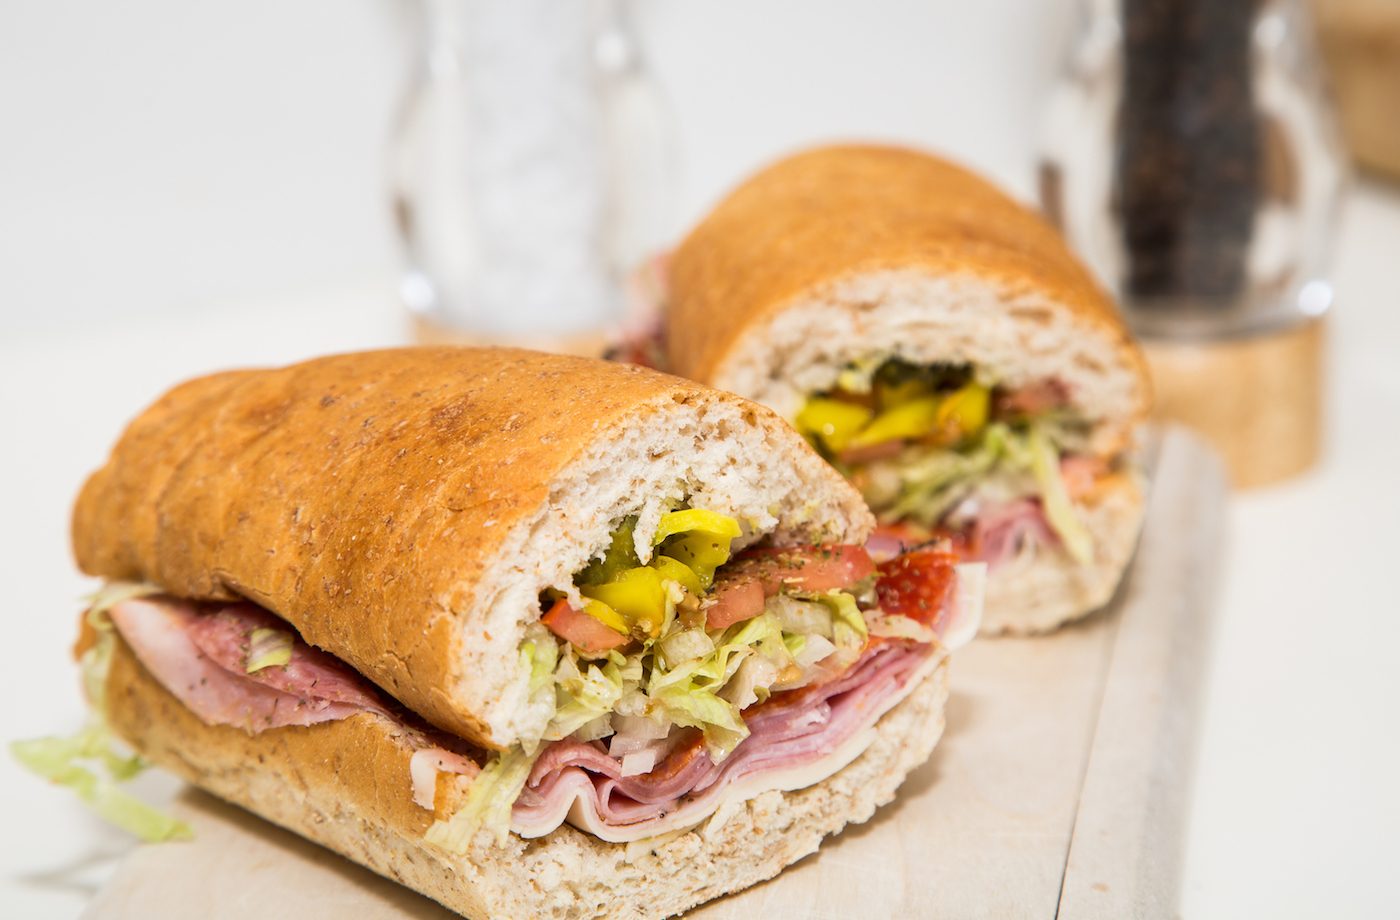 The Best Macro Friendly Subway Sandwich Options - Oh Snap Macros